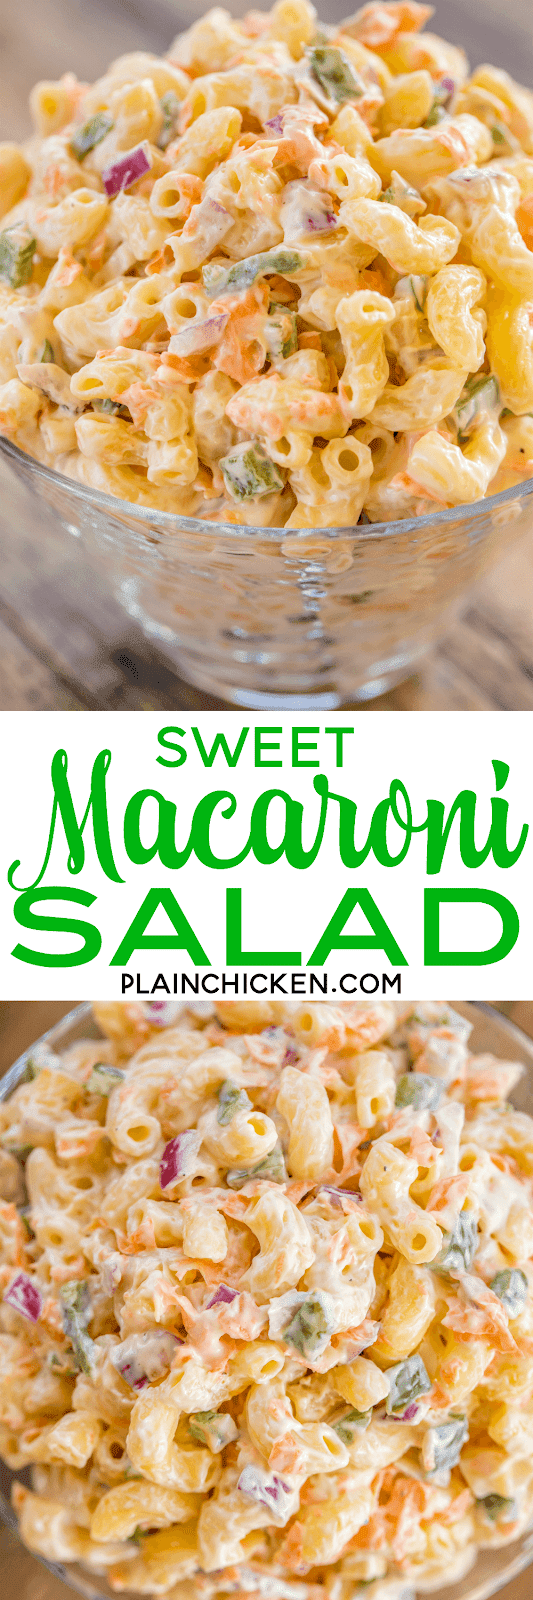 bowl of Macaroni Salad